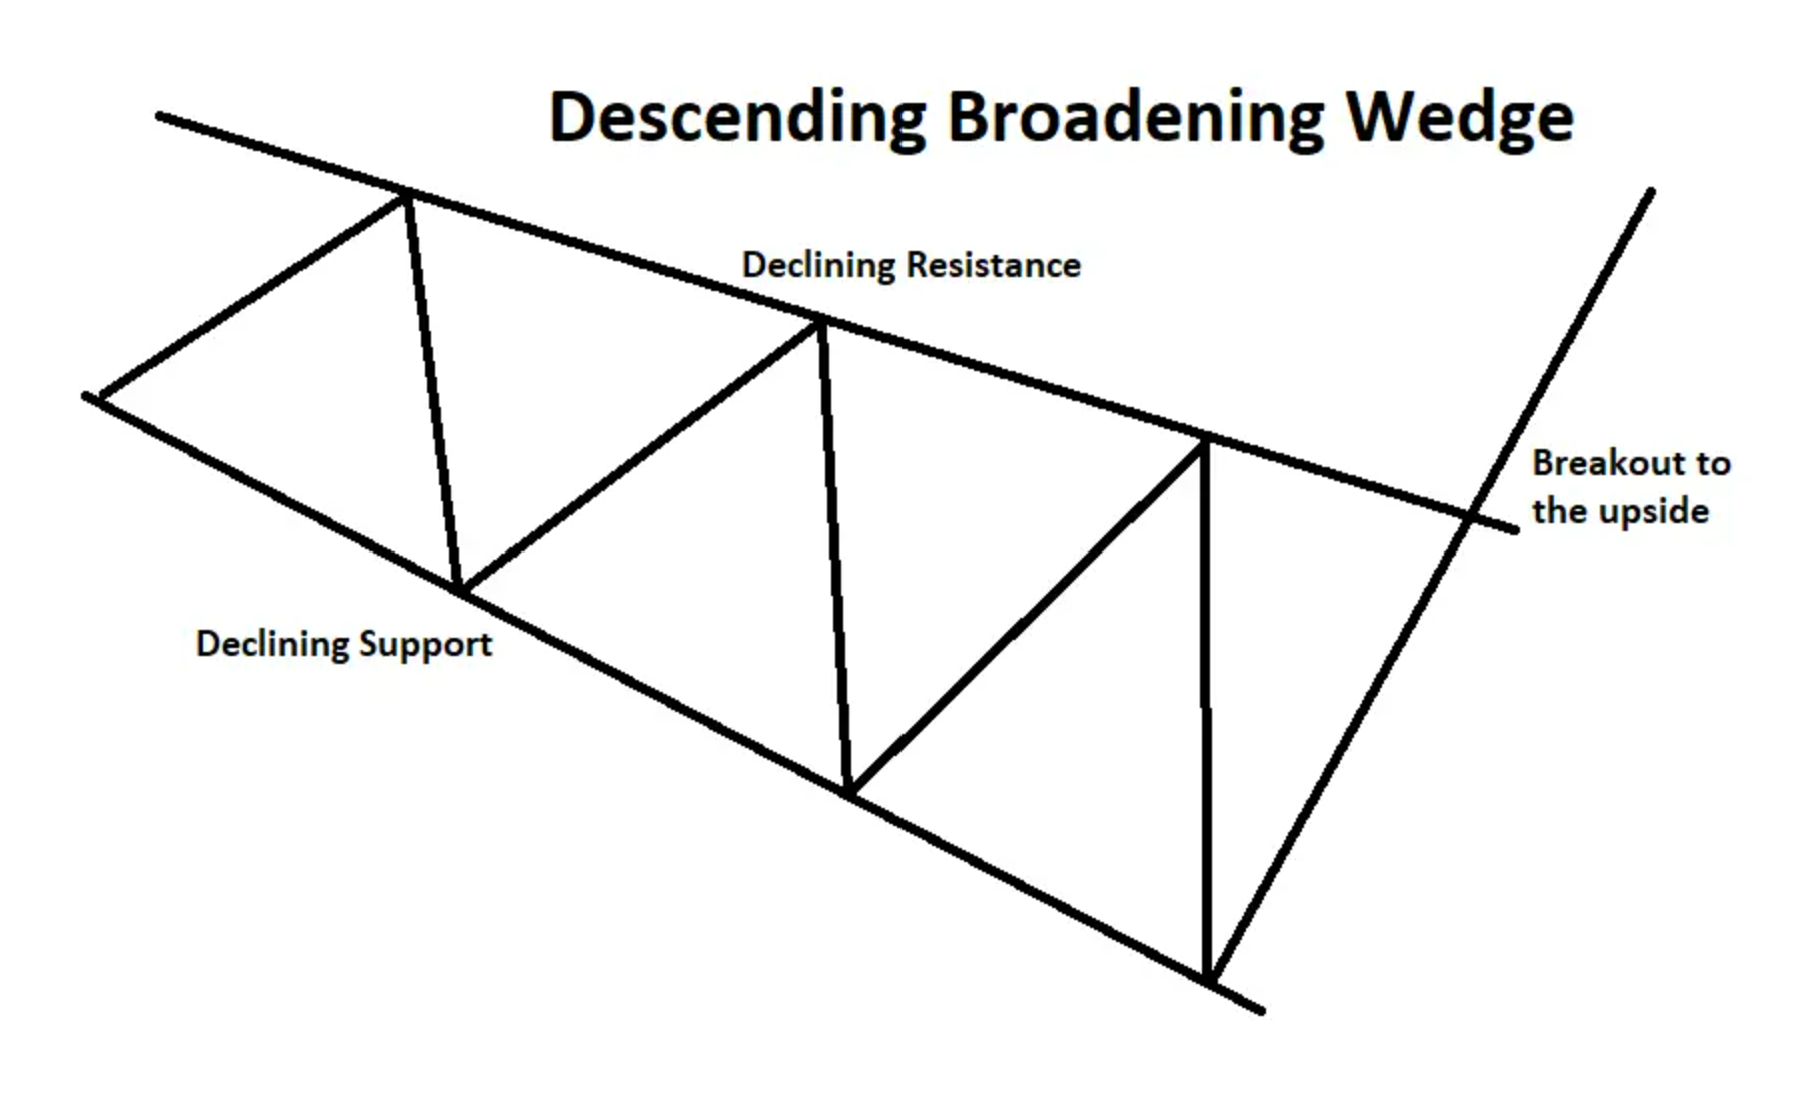 Descending Broadening Wedge Pattern